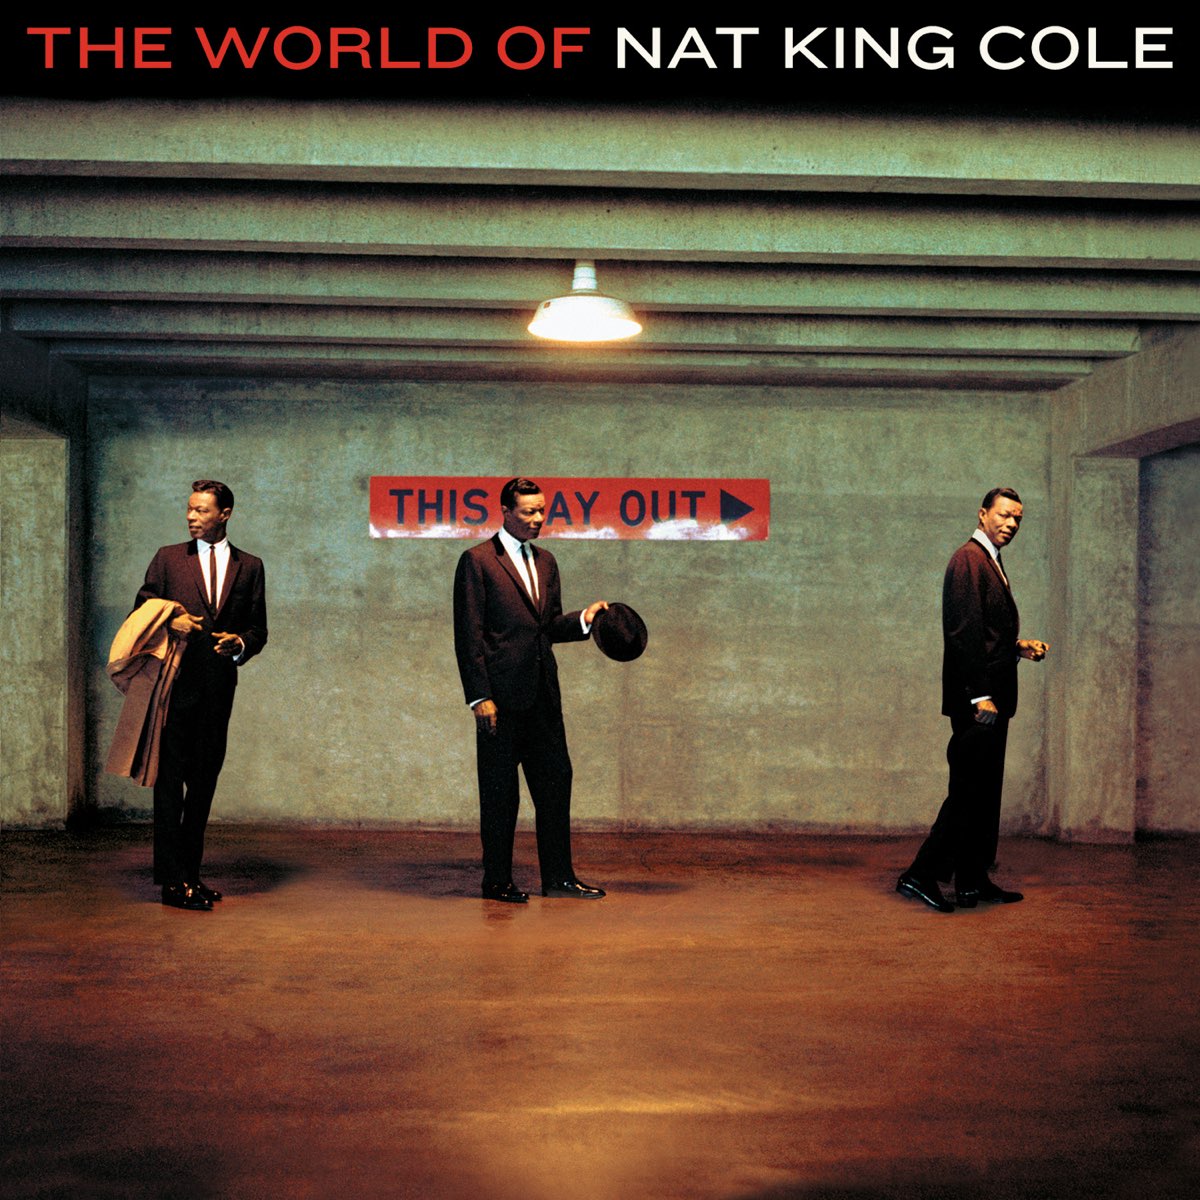 Såkaldte Definere planer The World of Nat King Cole by Nat "King" Cole on Apple Music